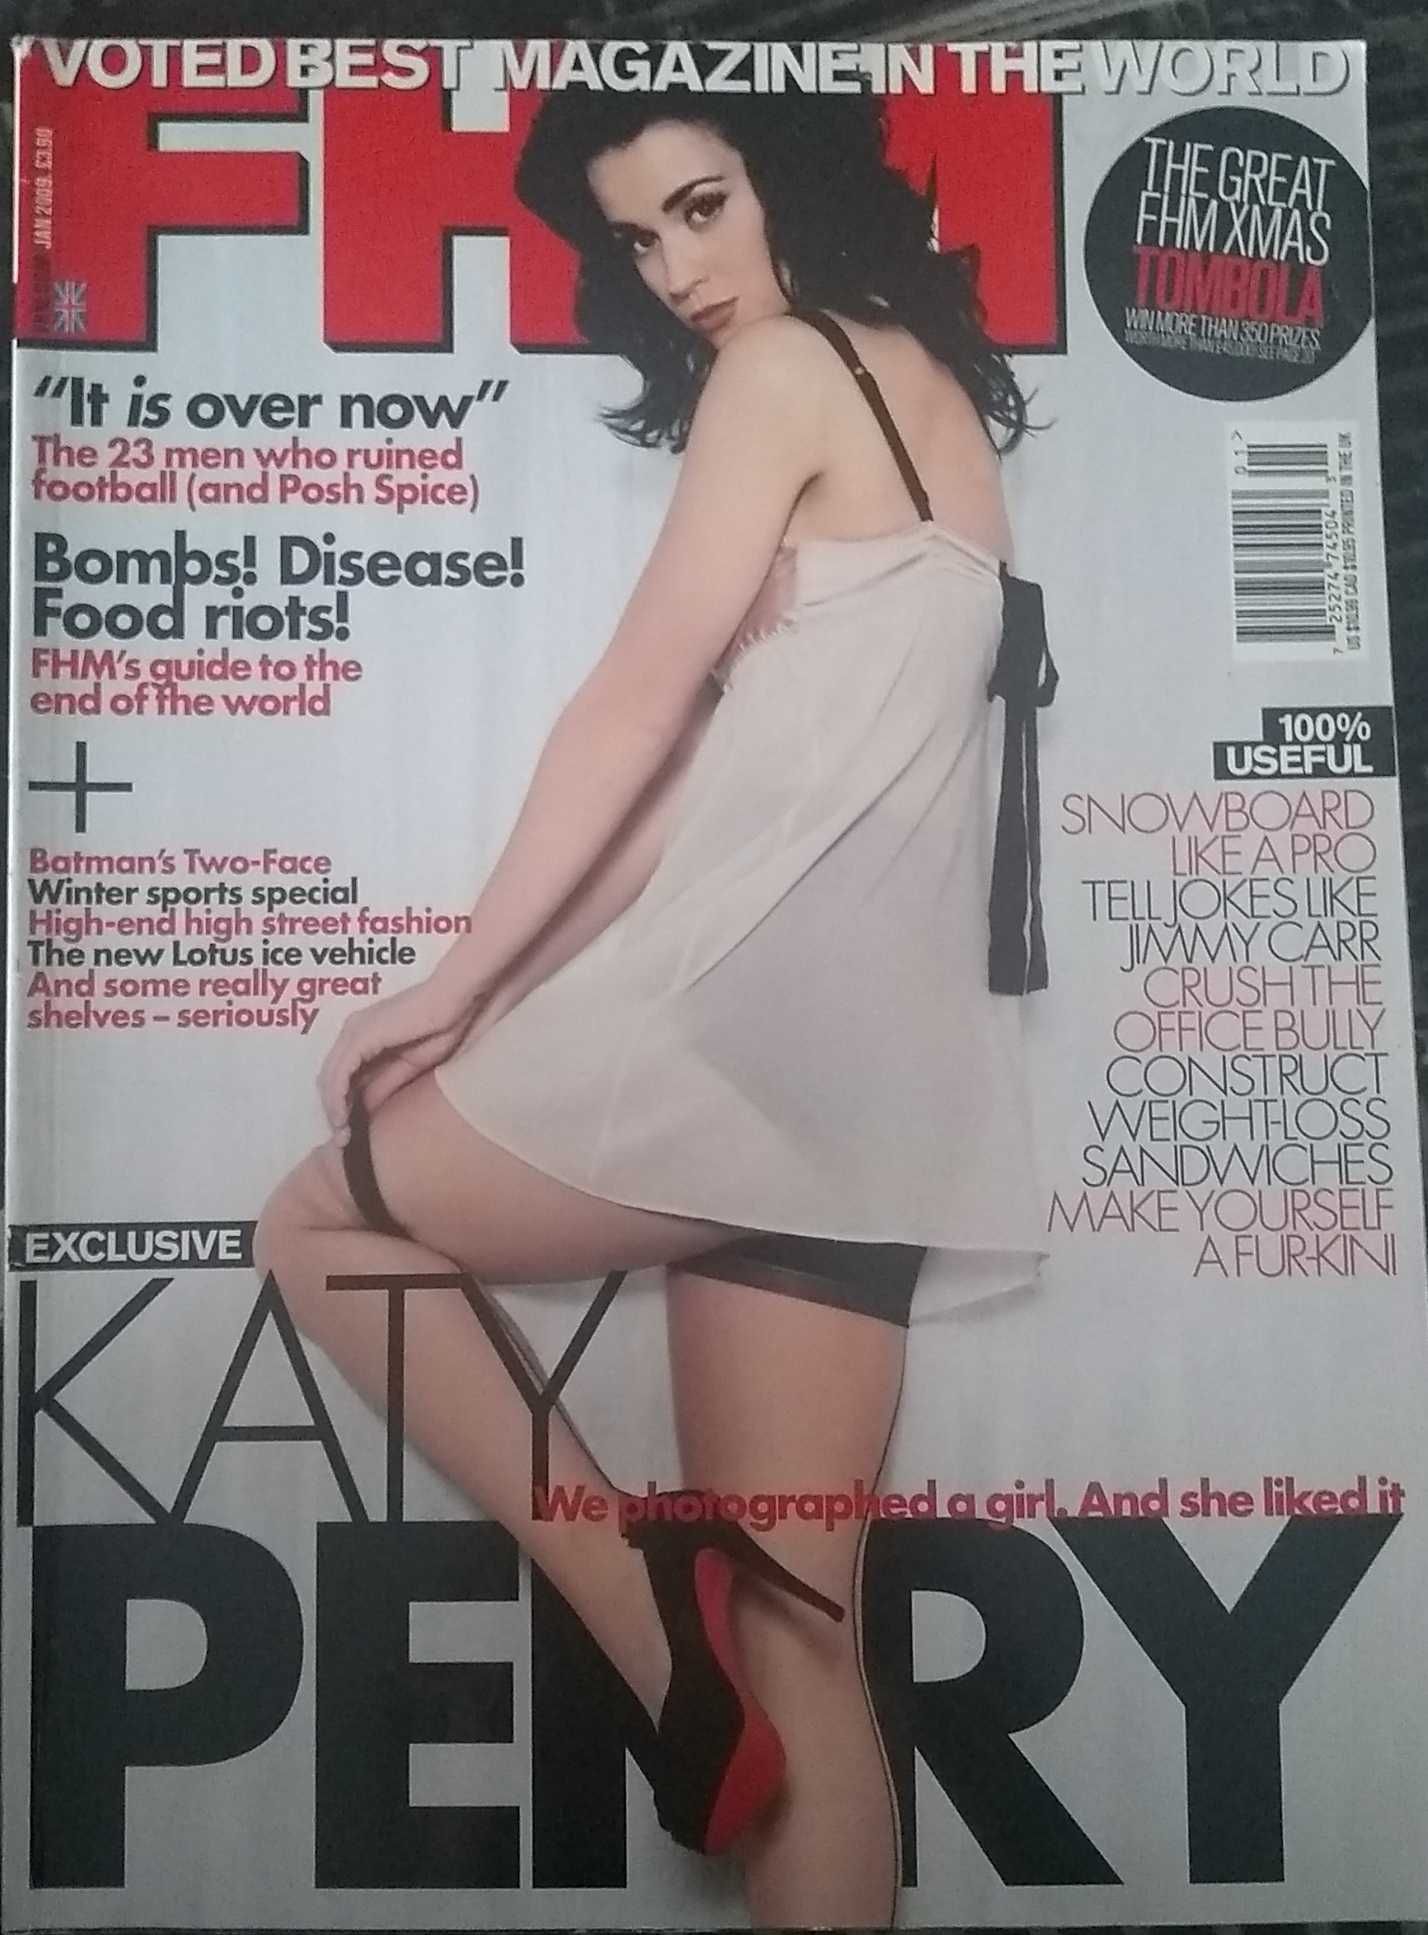 Katy Perry pocztówki unikaty z USA i 2 magazyny: FHM z UK i Vogue